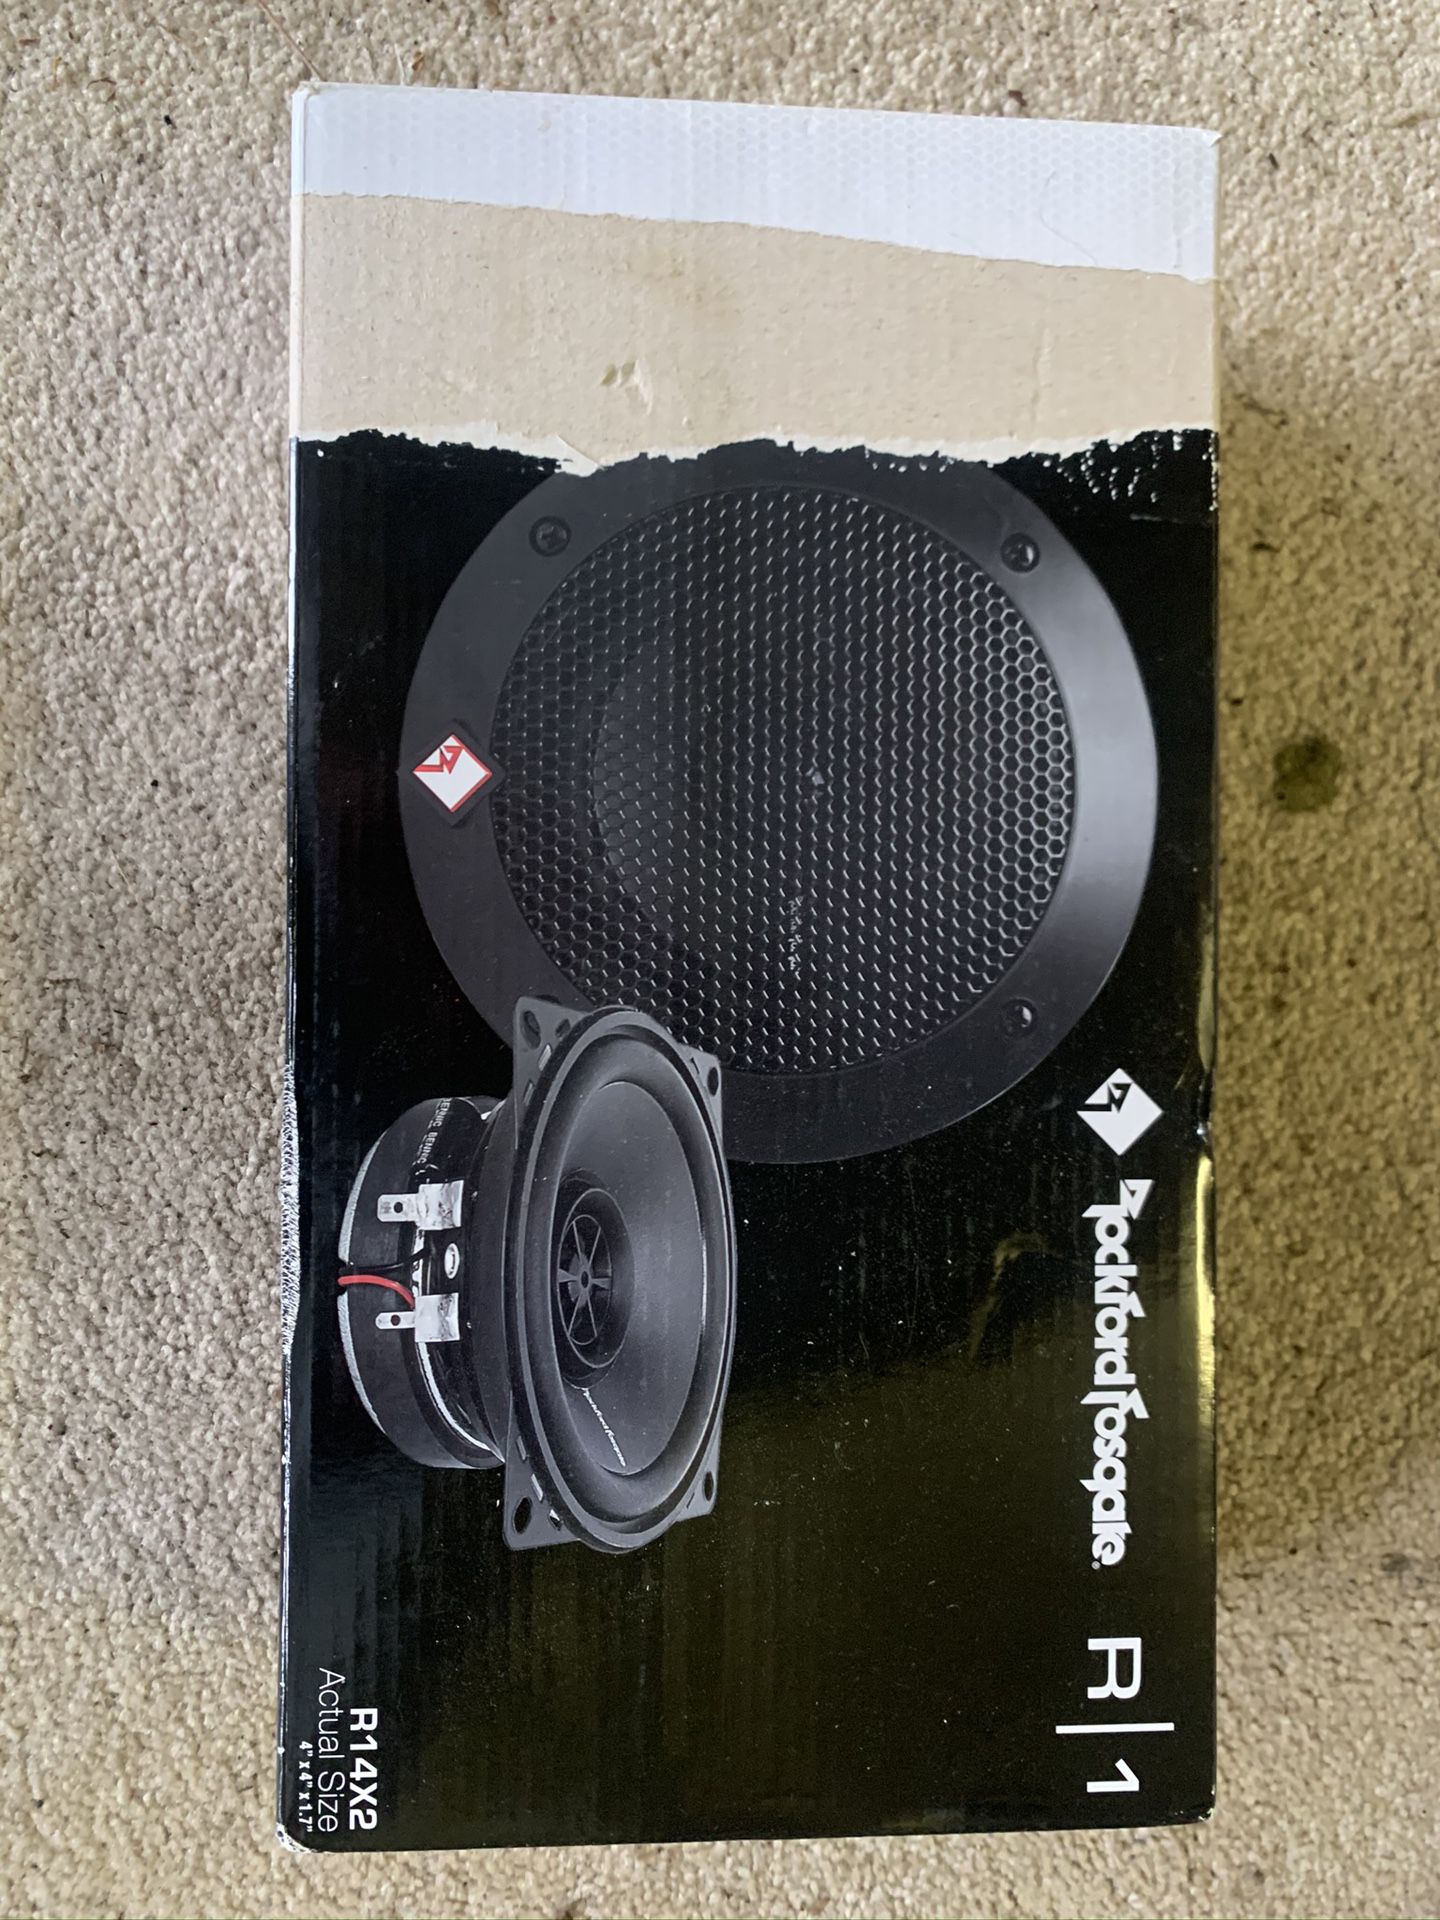 Rockford Fosgate car speakers